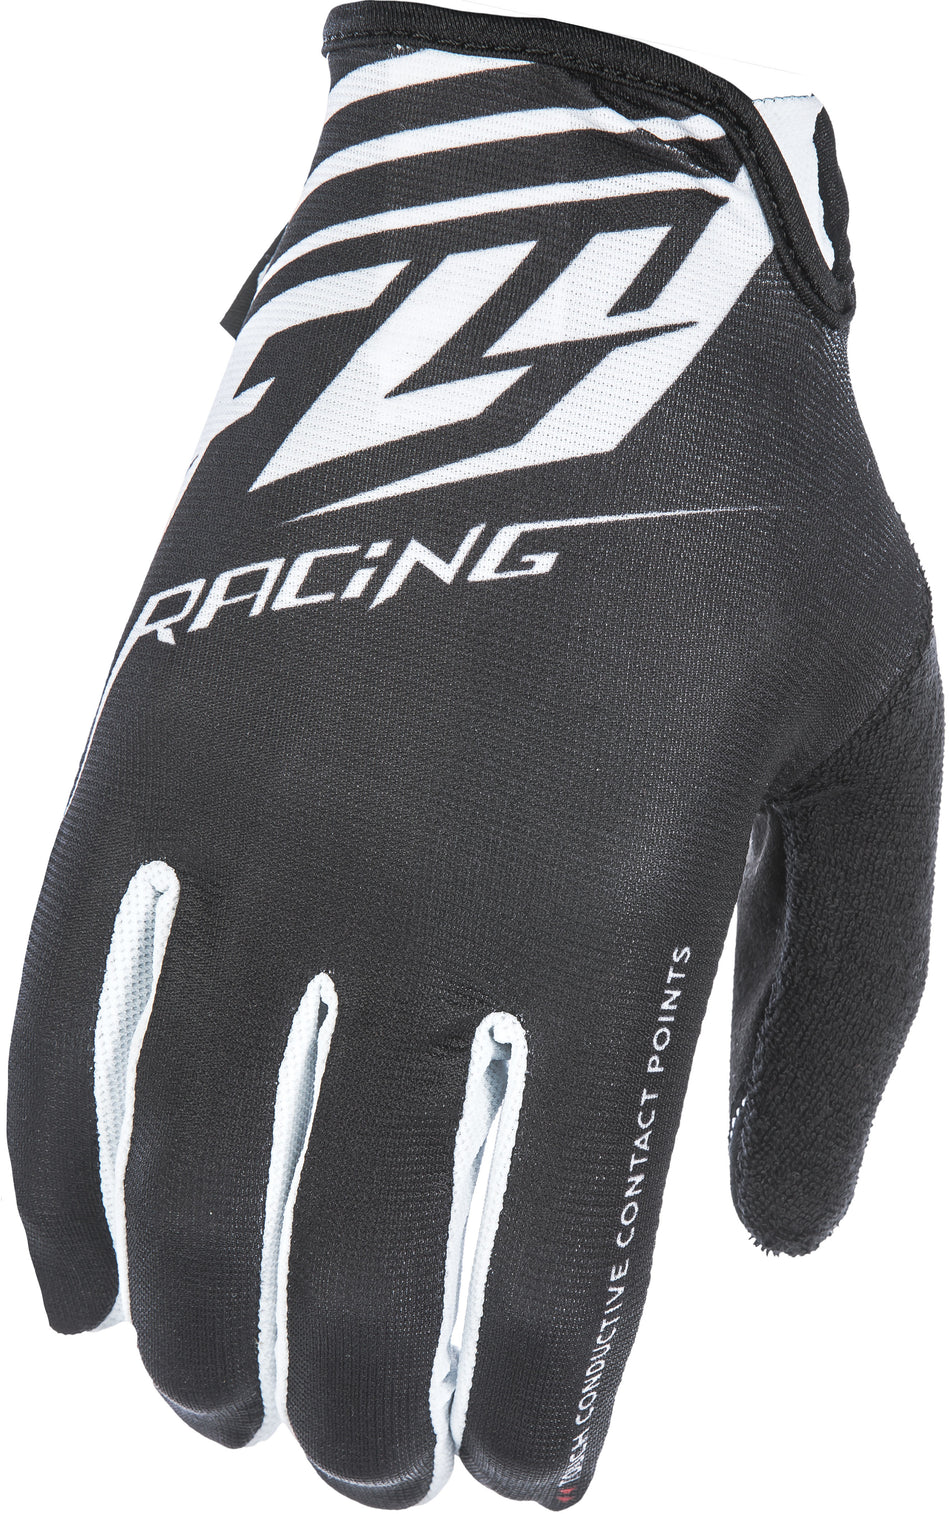 FLY RACING Media Gloves Black/White Sz 13 350-07413